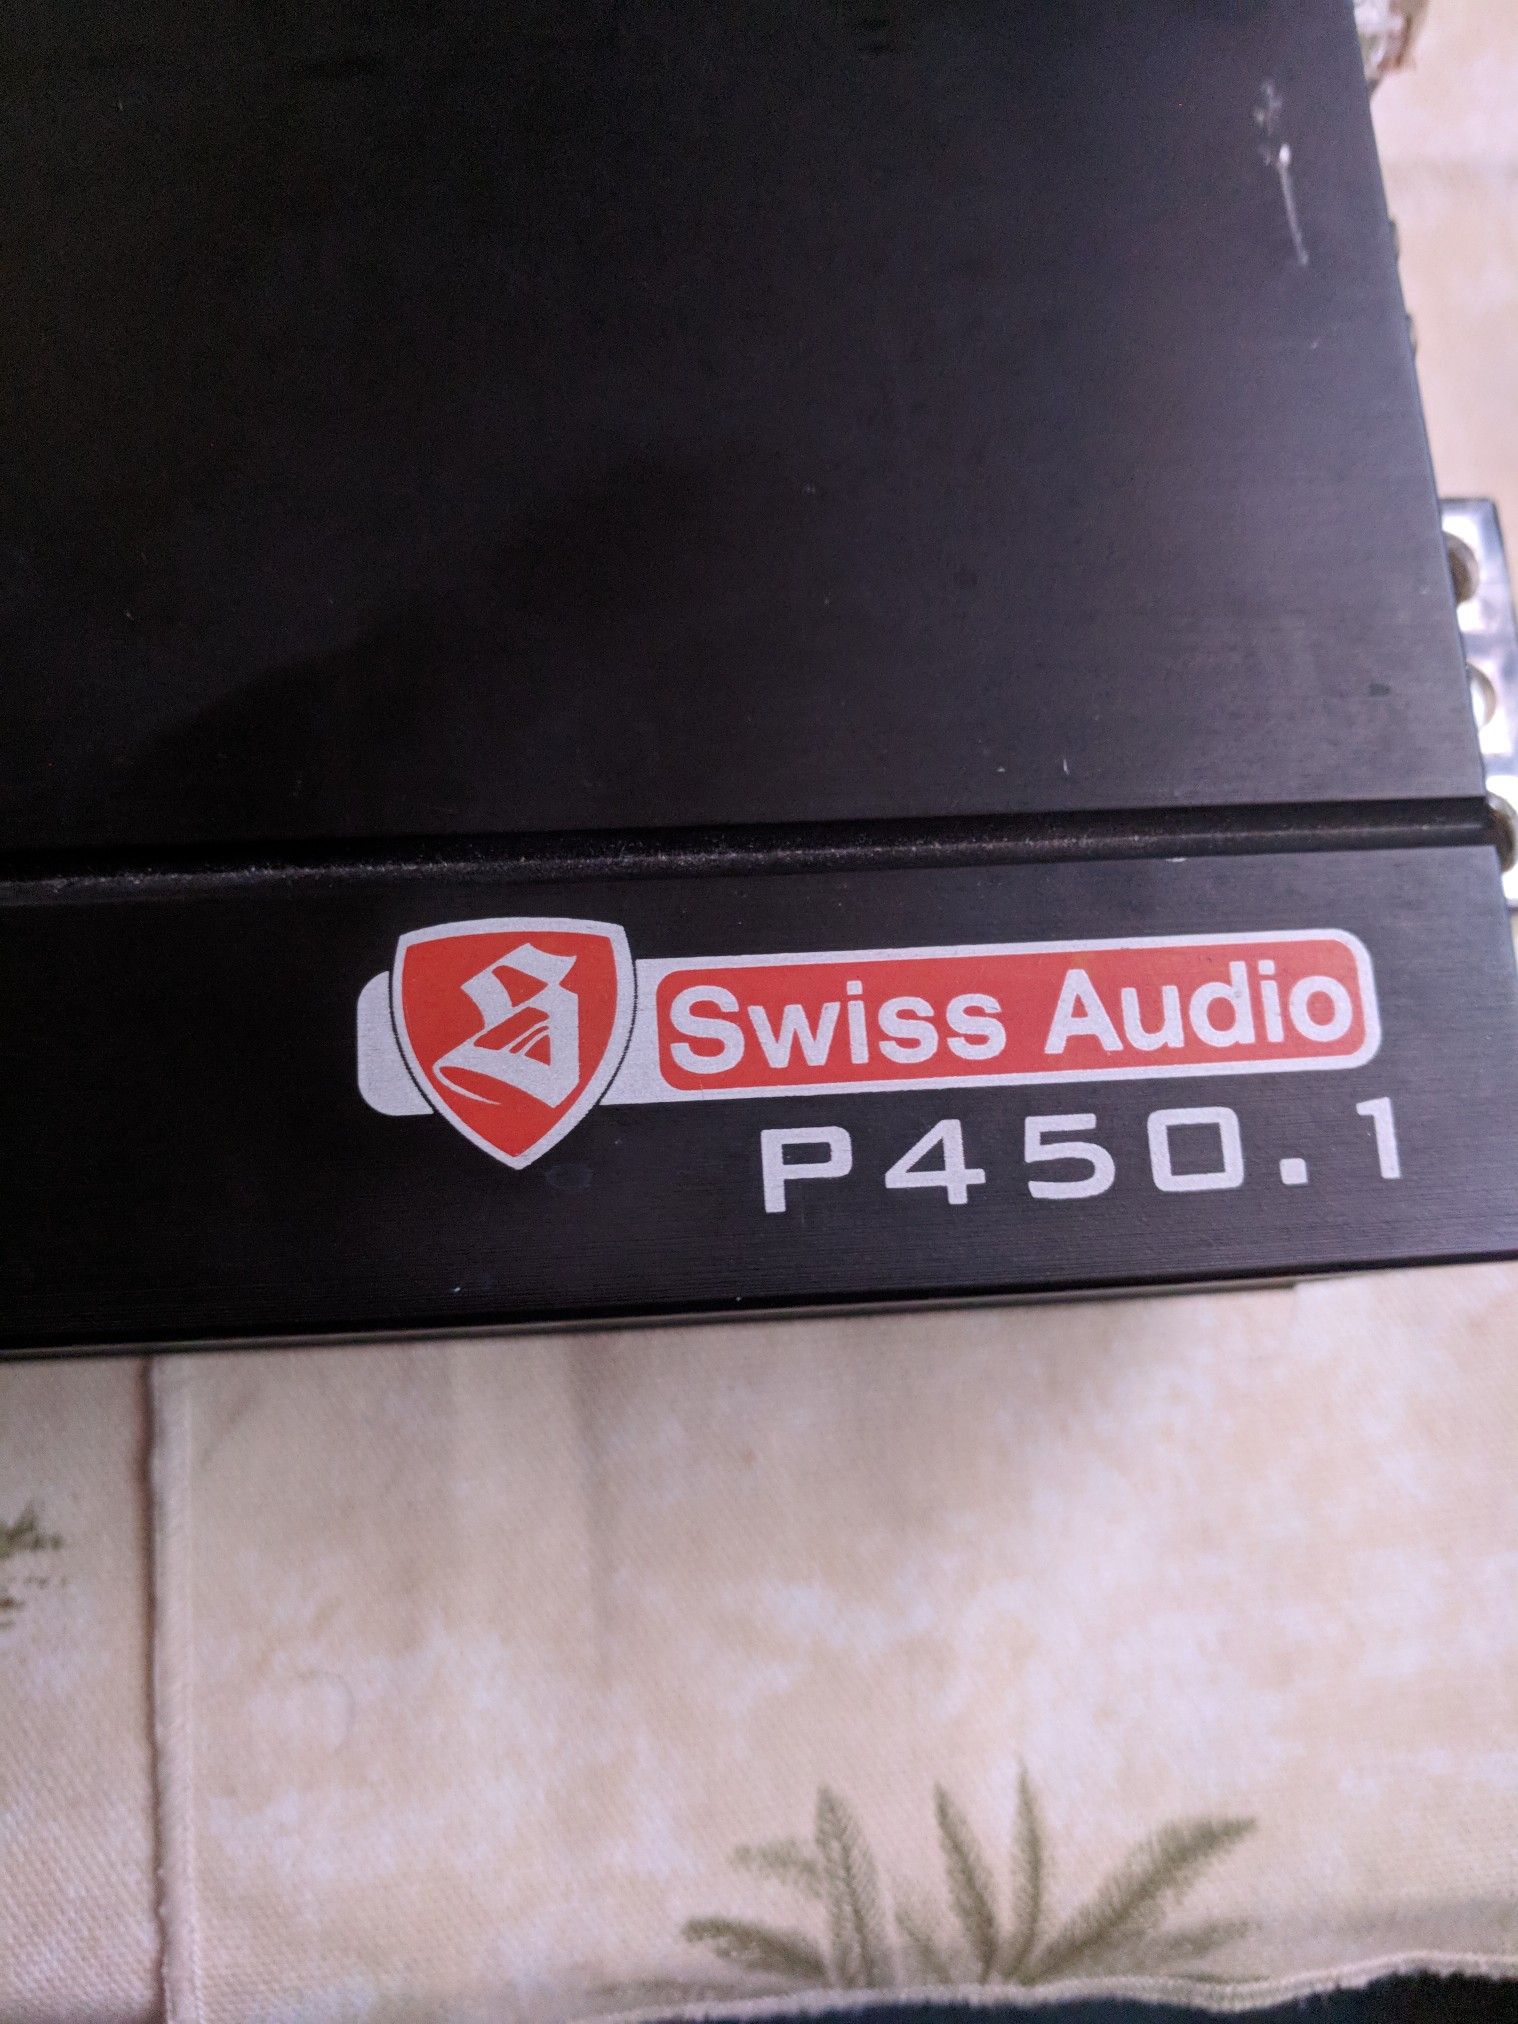 Swiss audio pro series amp